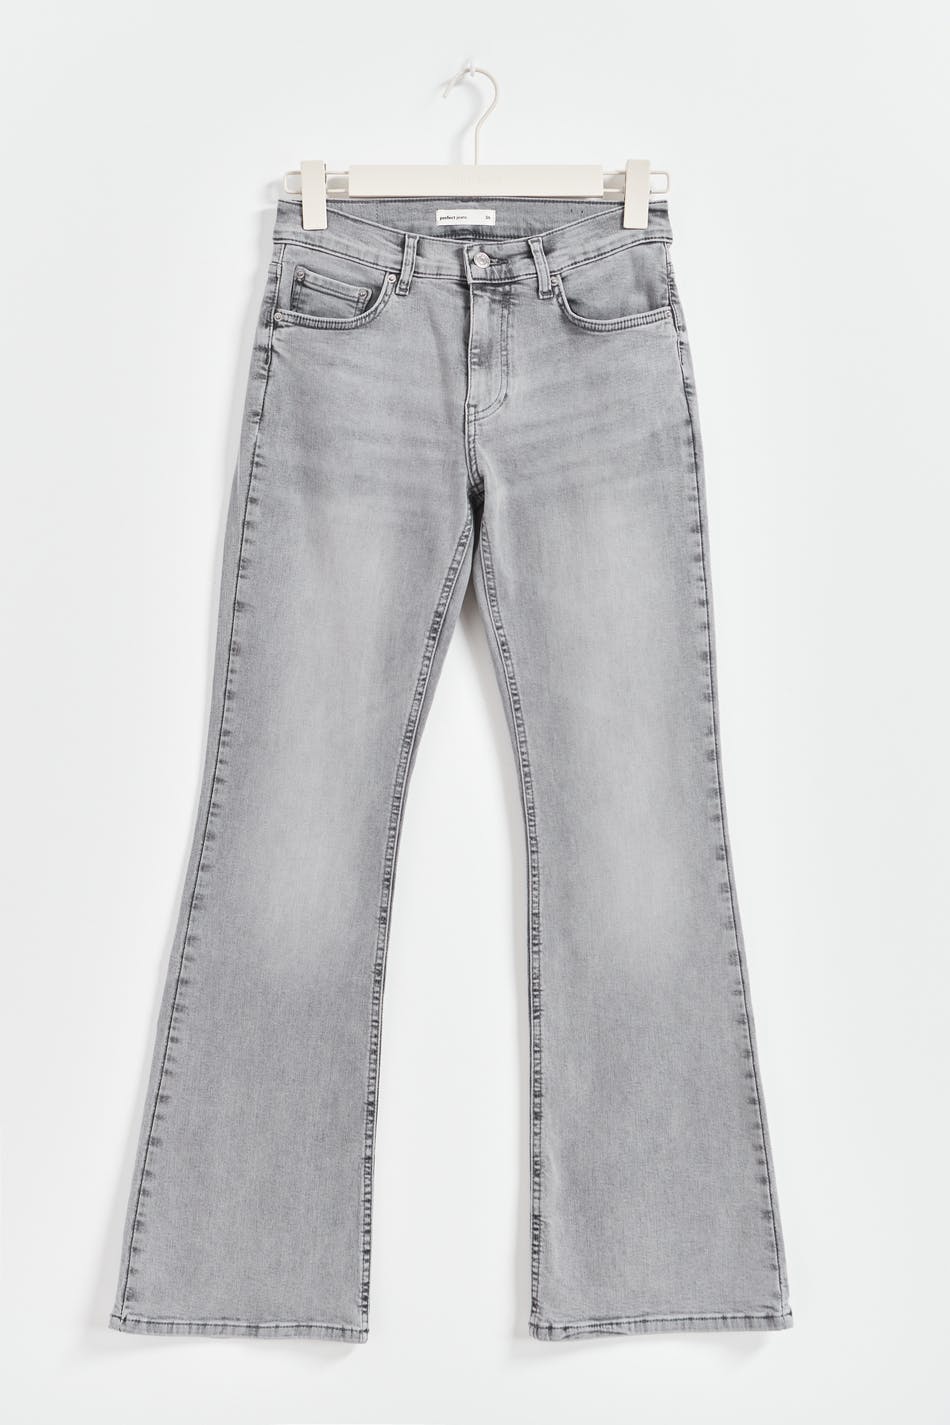 Low waist tall bootcut jeans